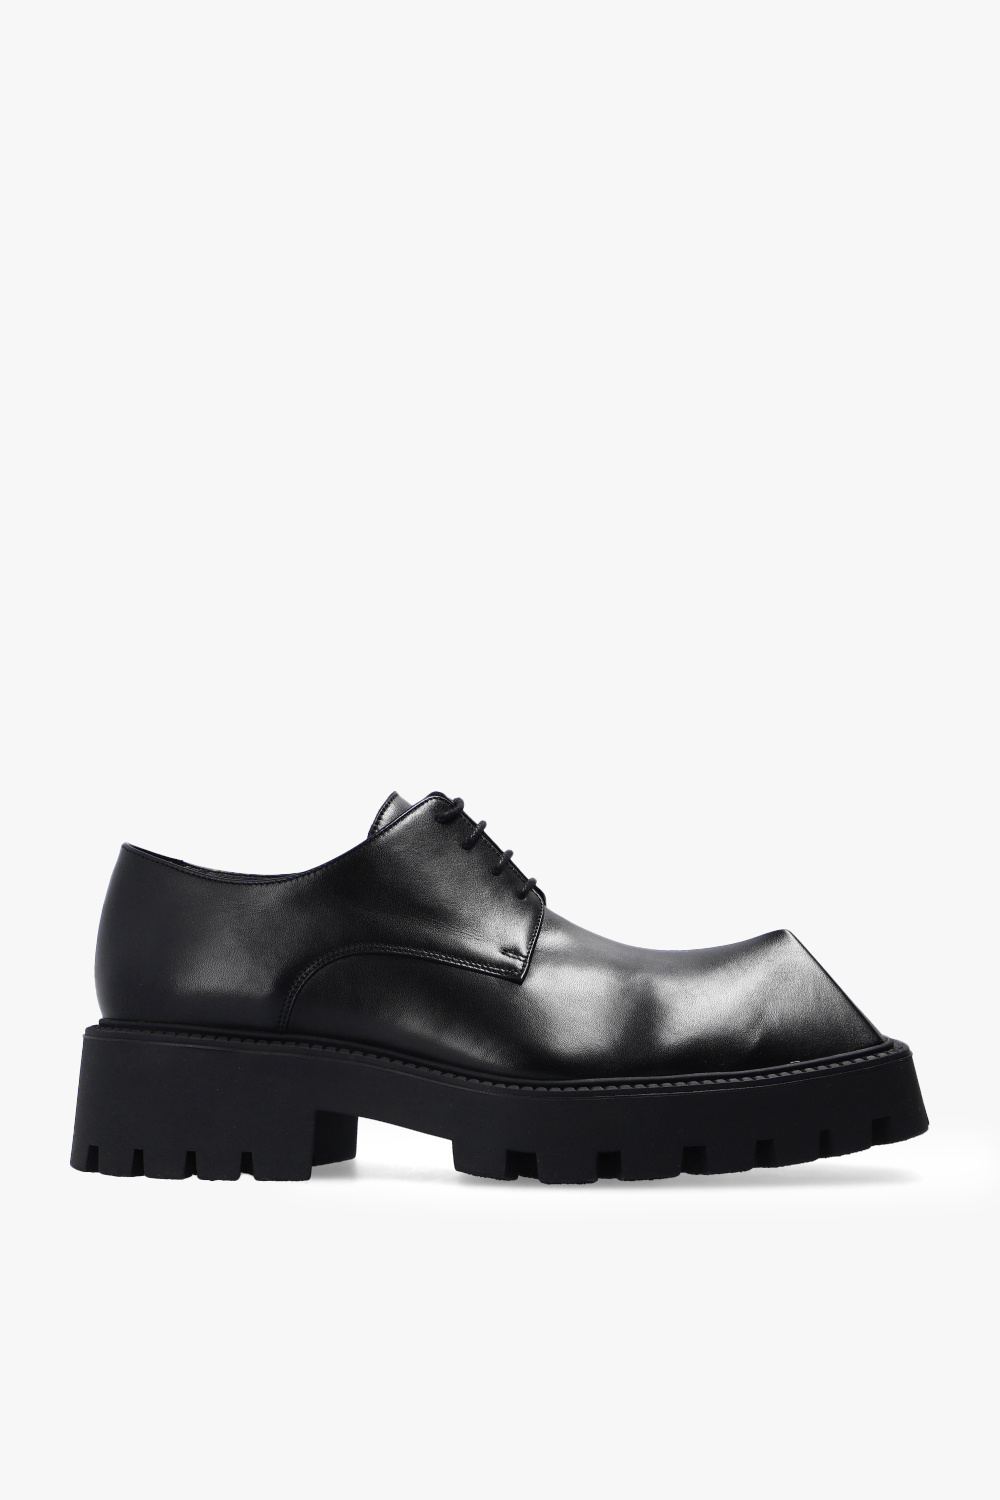 Balenciaga ‘Rhino’ derby shoes | Men's Shoes | Vitkac